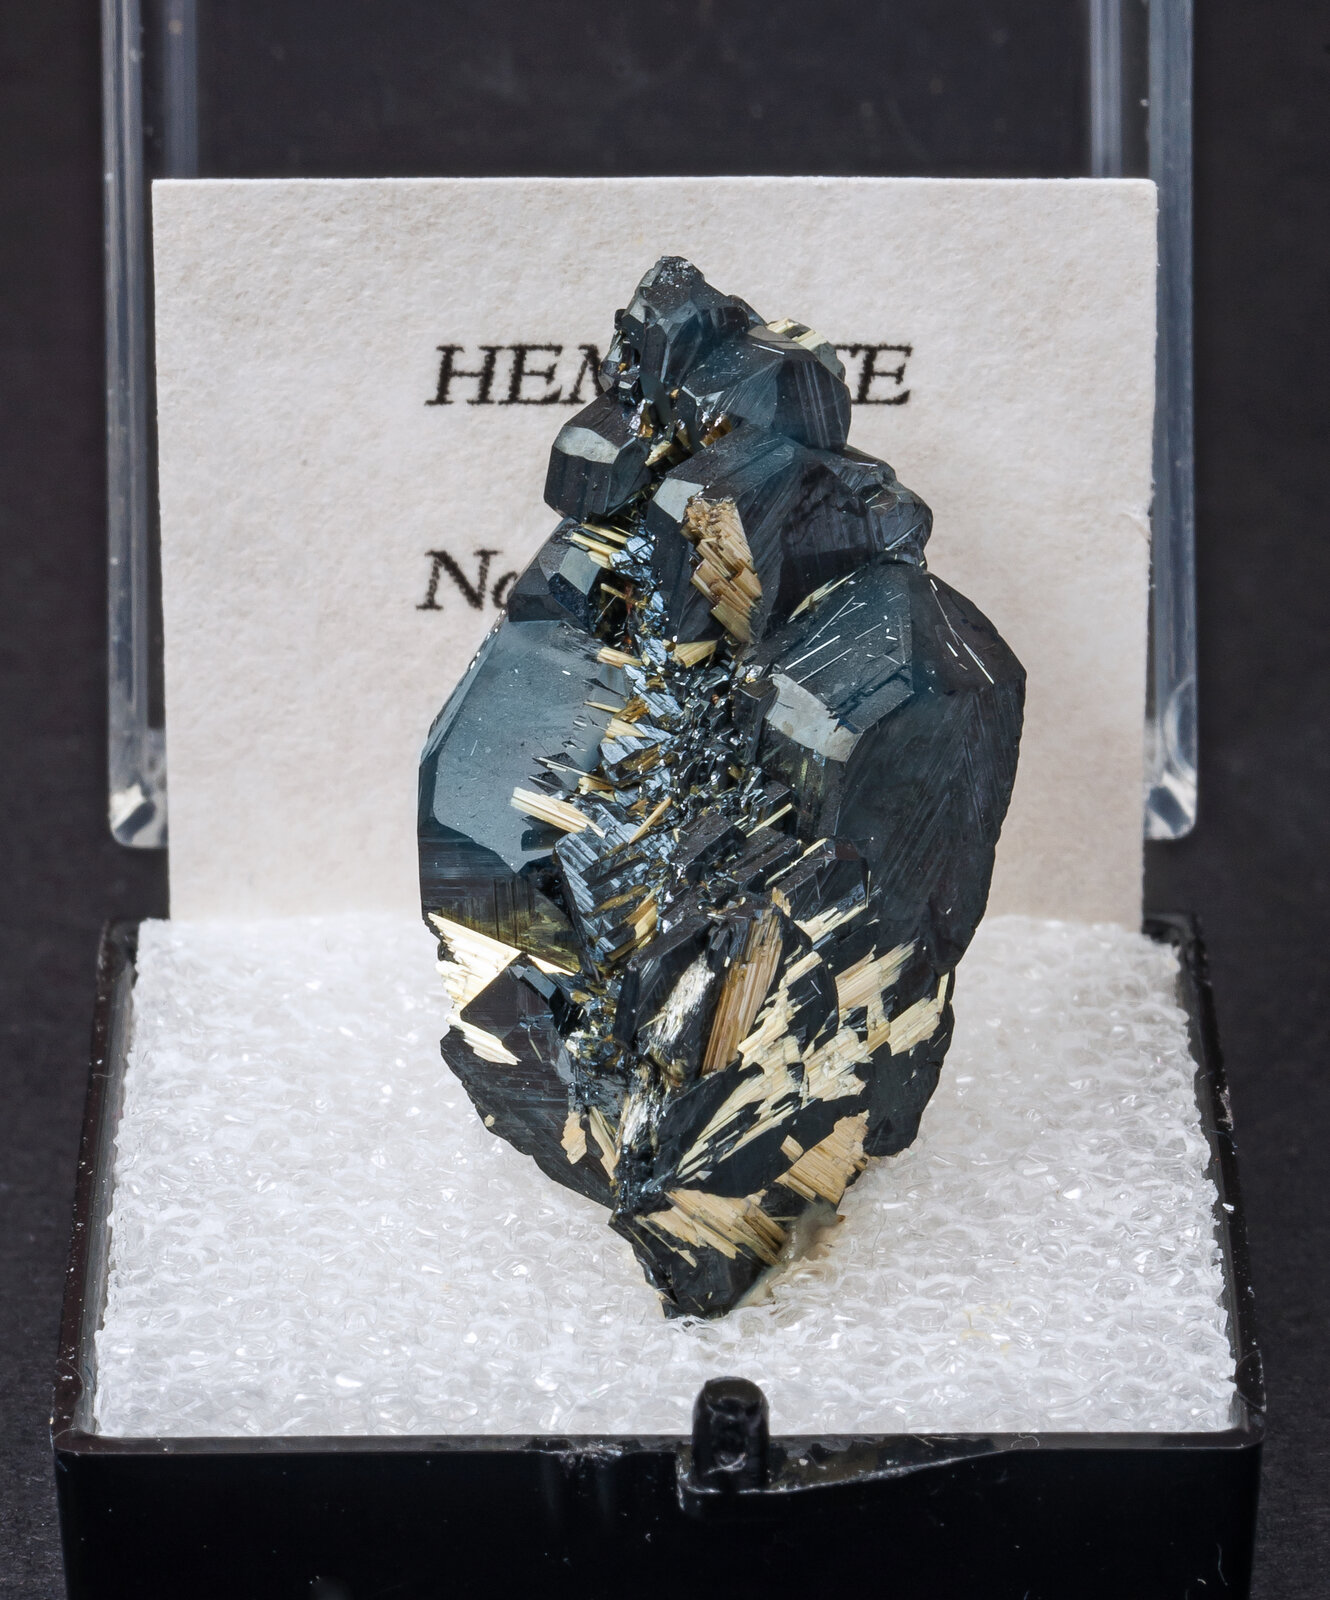 specimens/s_imagesAM9/Hematite-MM96AM9f1.jpg